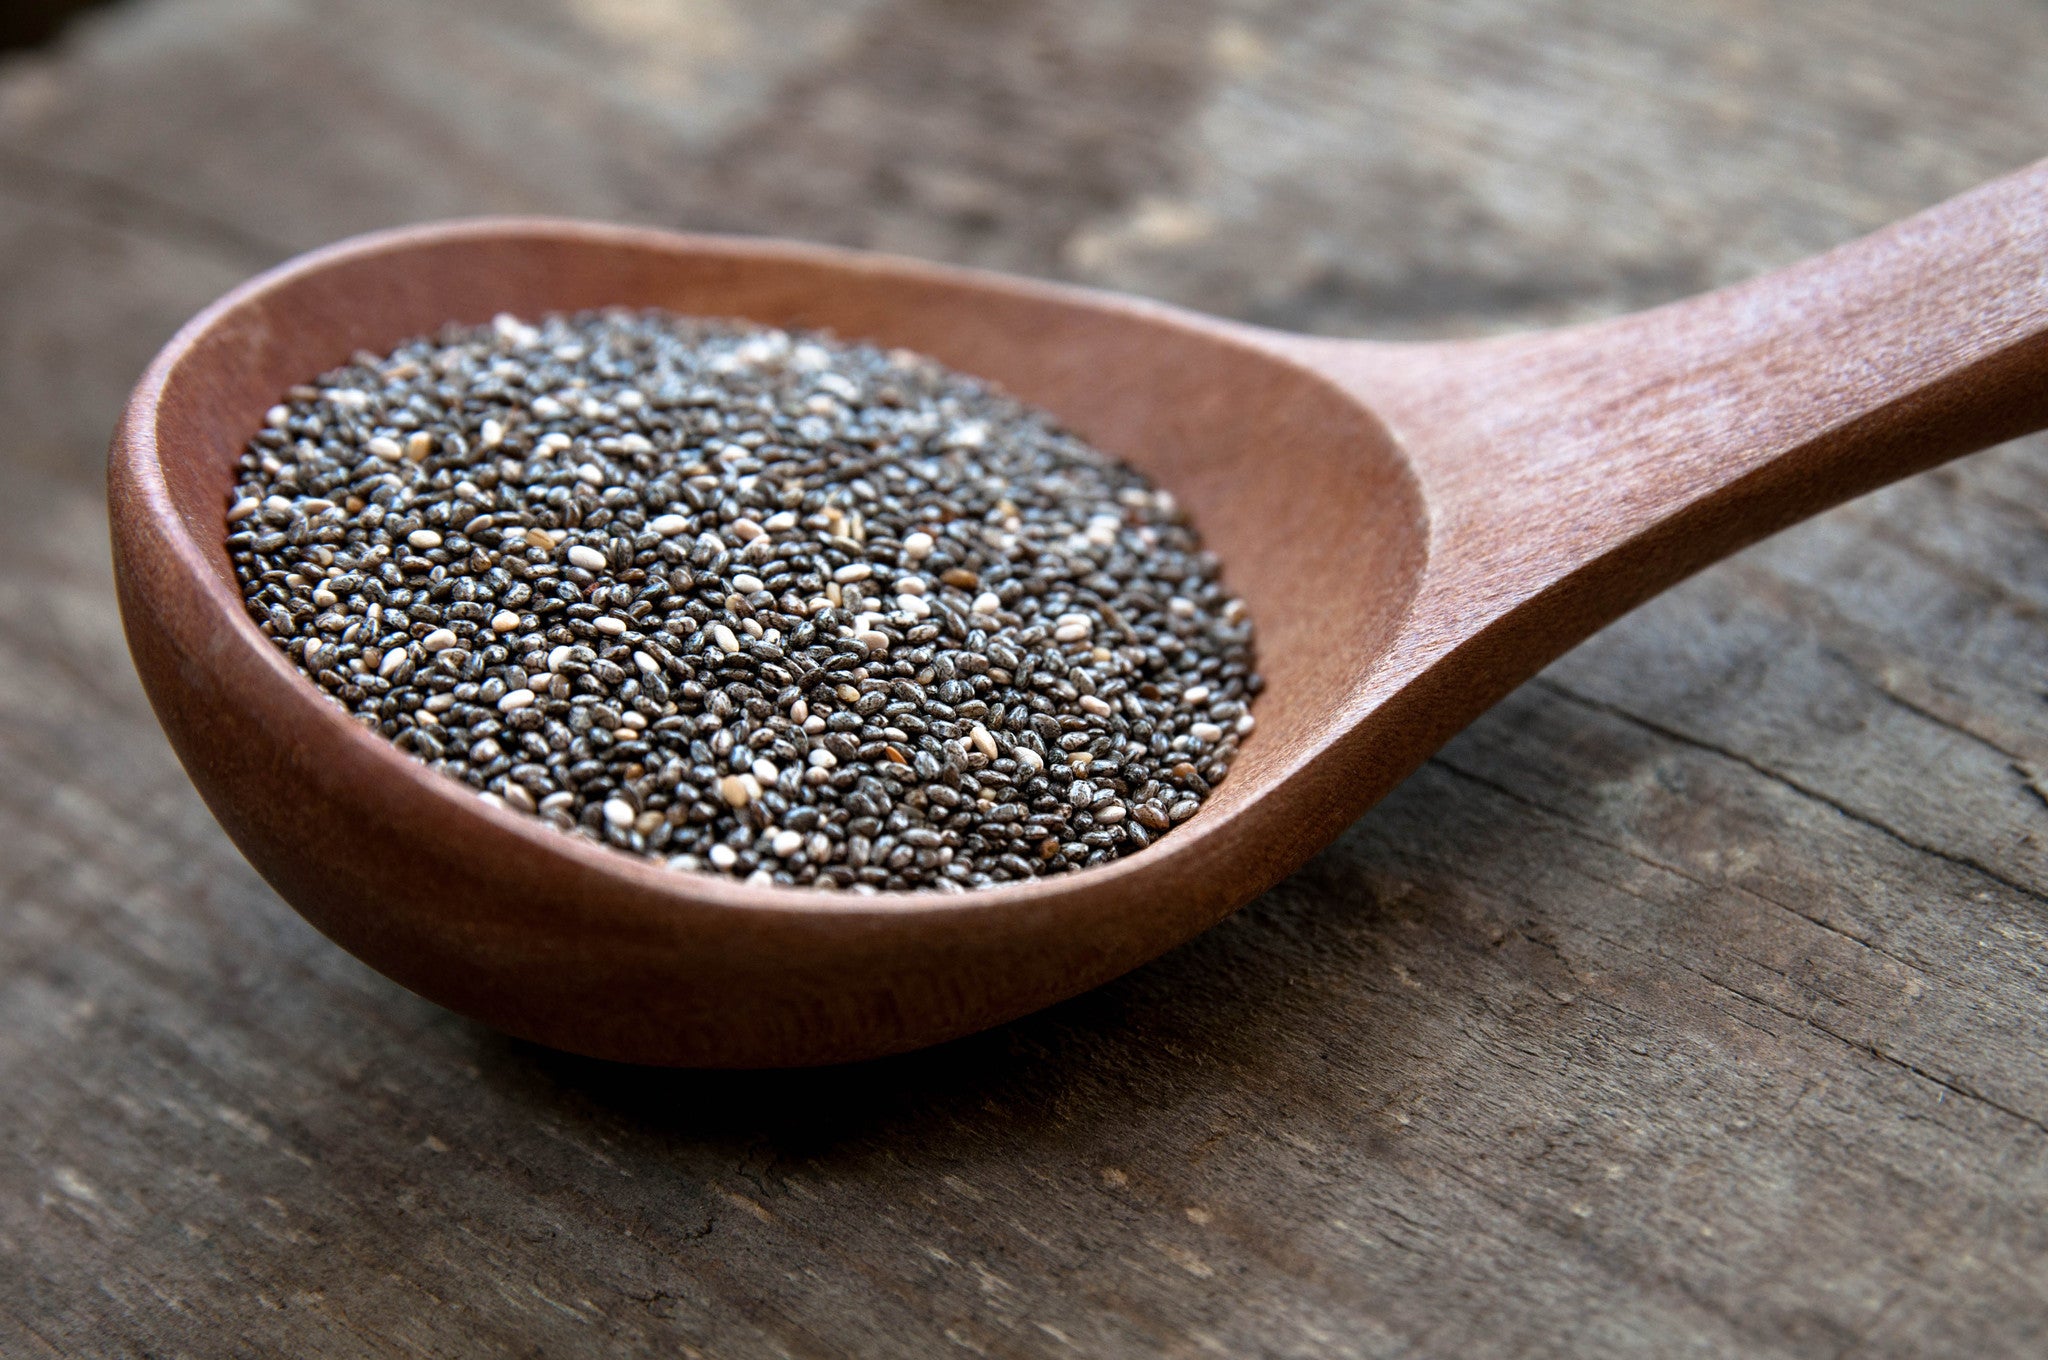 Chia seeds 101: Health benefits & how to eat more